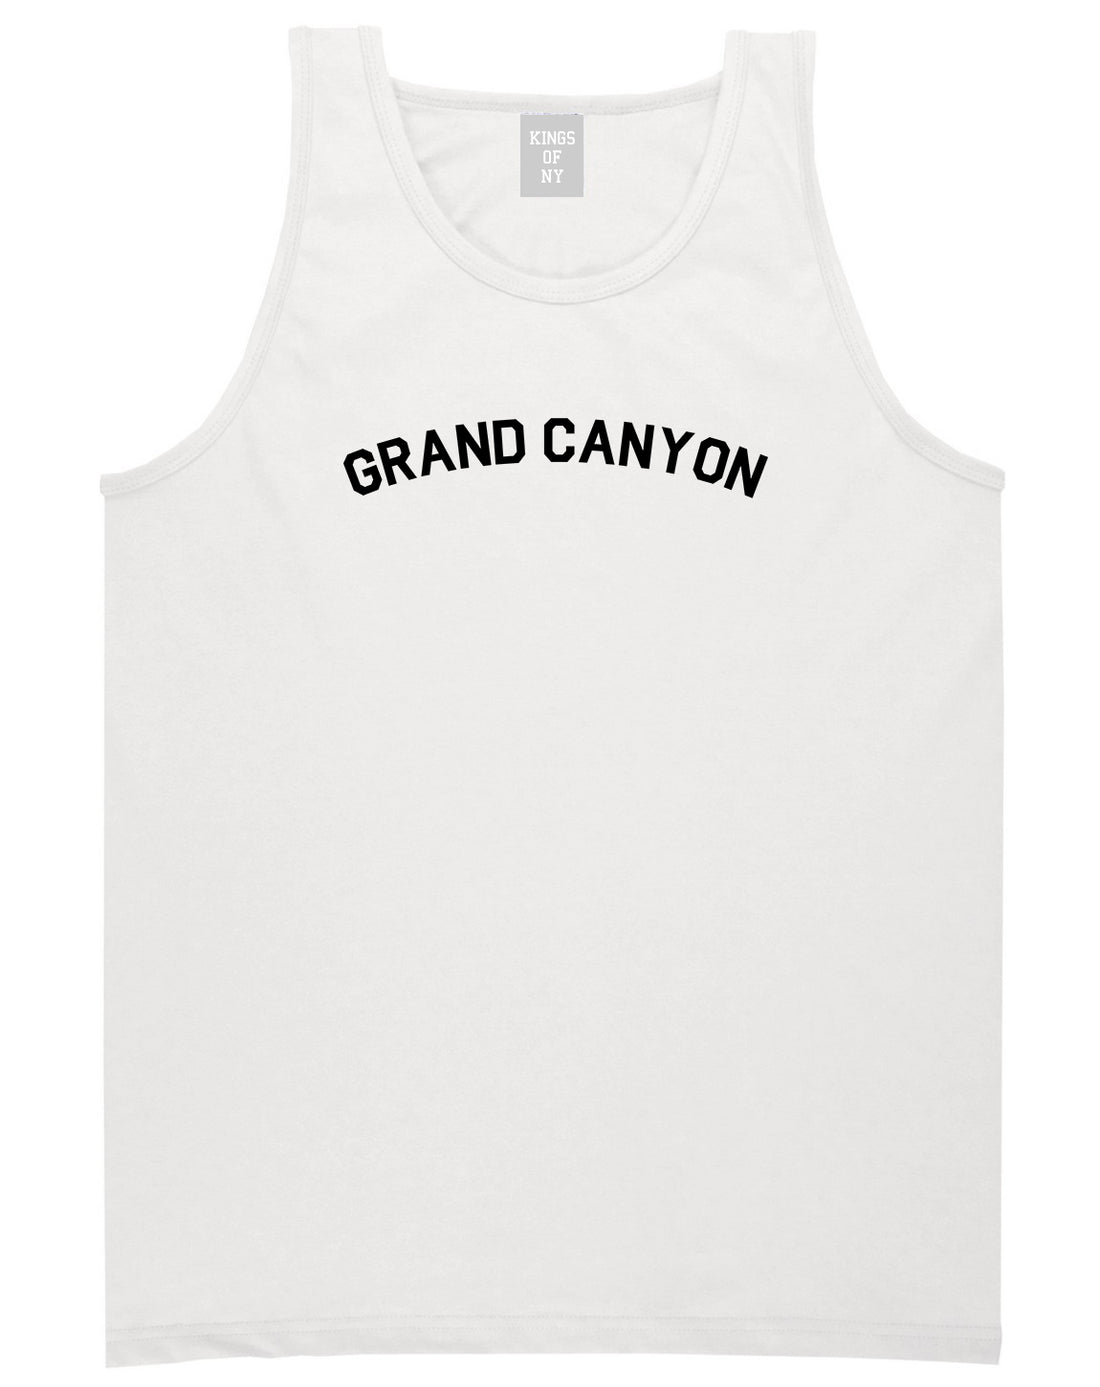 Grand Canyon Mens White Tank Top Shirt by KINGS OF NY